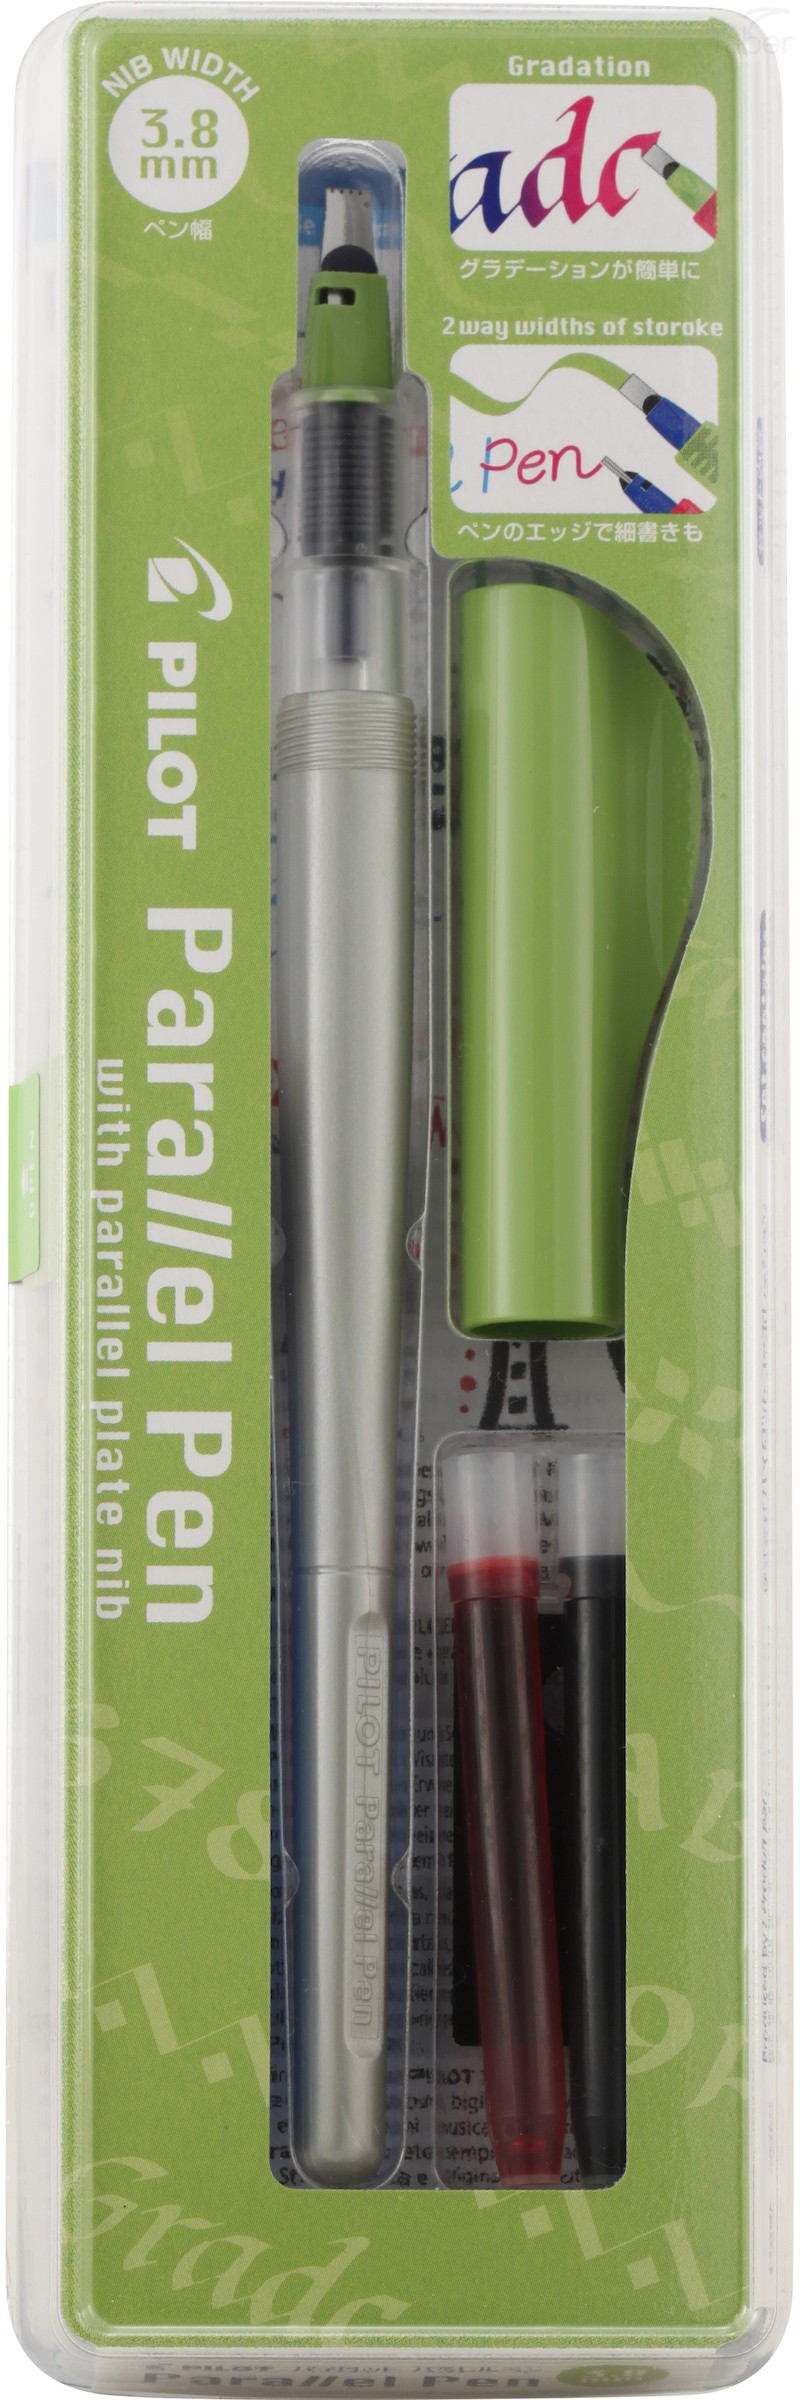 Pilot FP338-SET Parallel Pen Set, 3.8mm nib